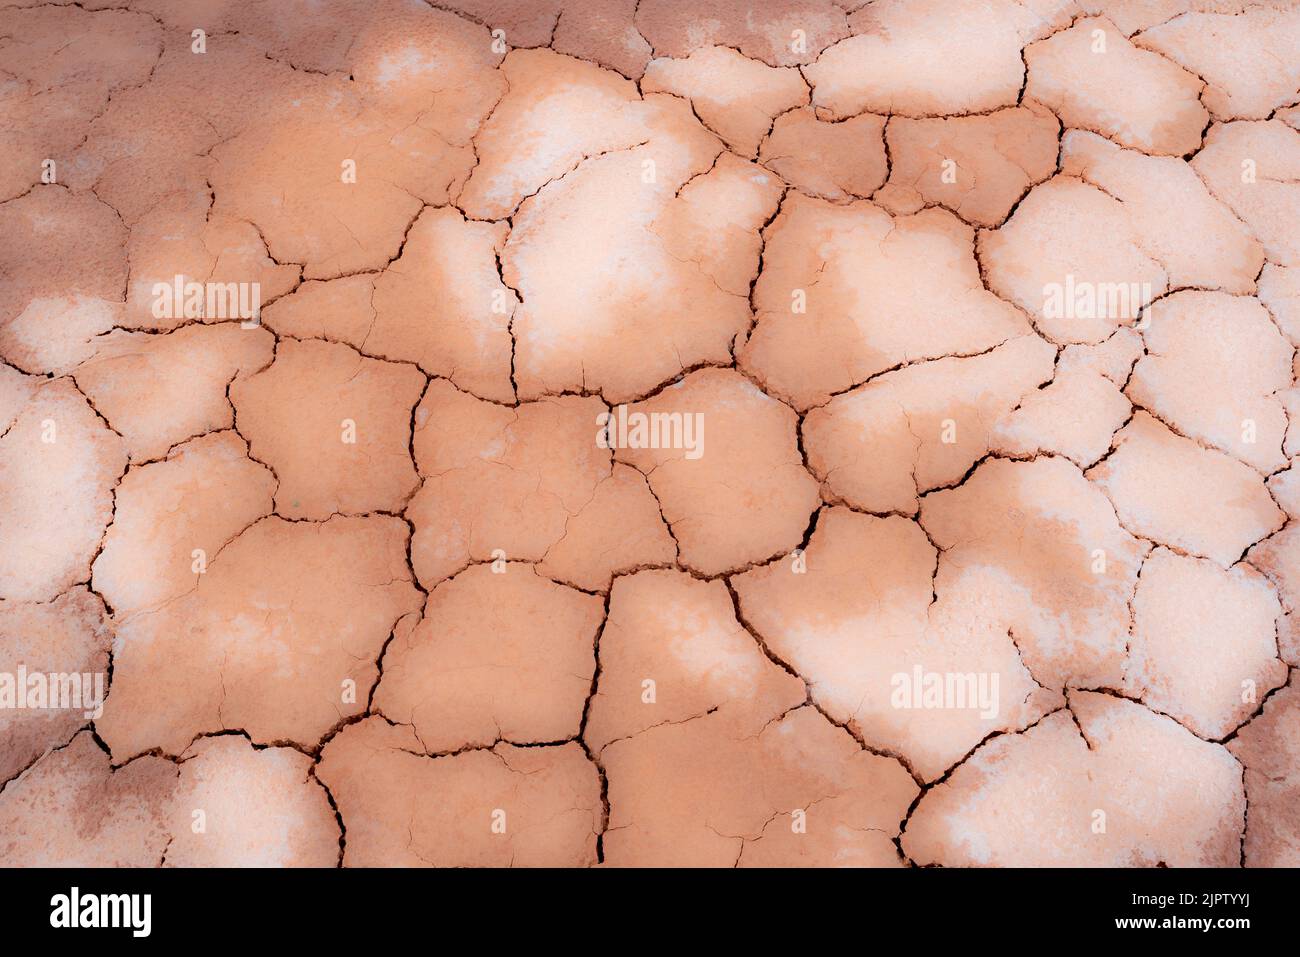 Cracked ground, Anderson Bottom, Canyonlands National Park, Utah. Stock Photo